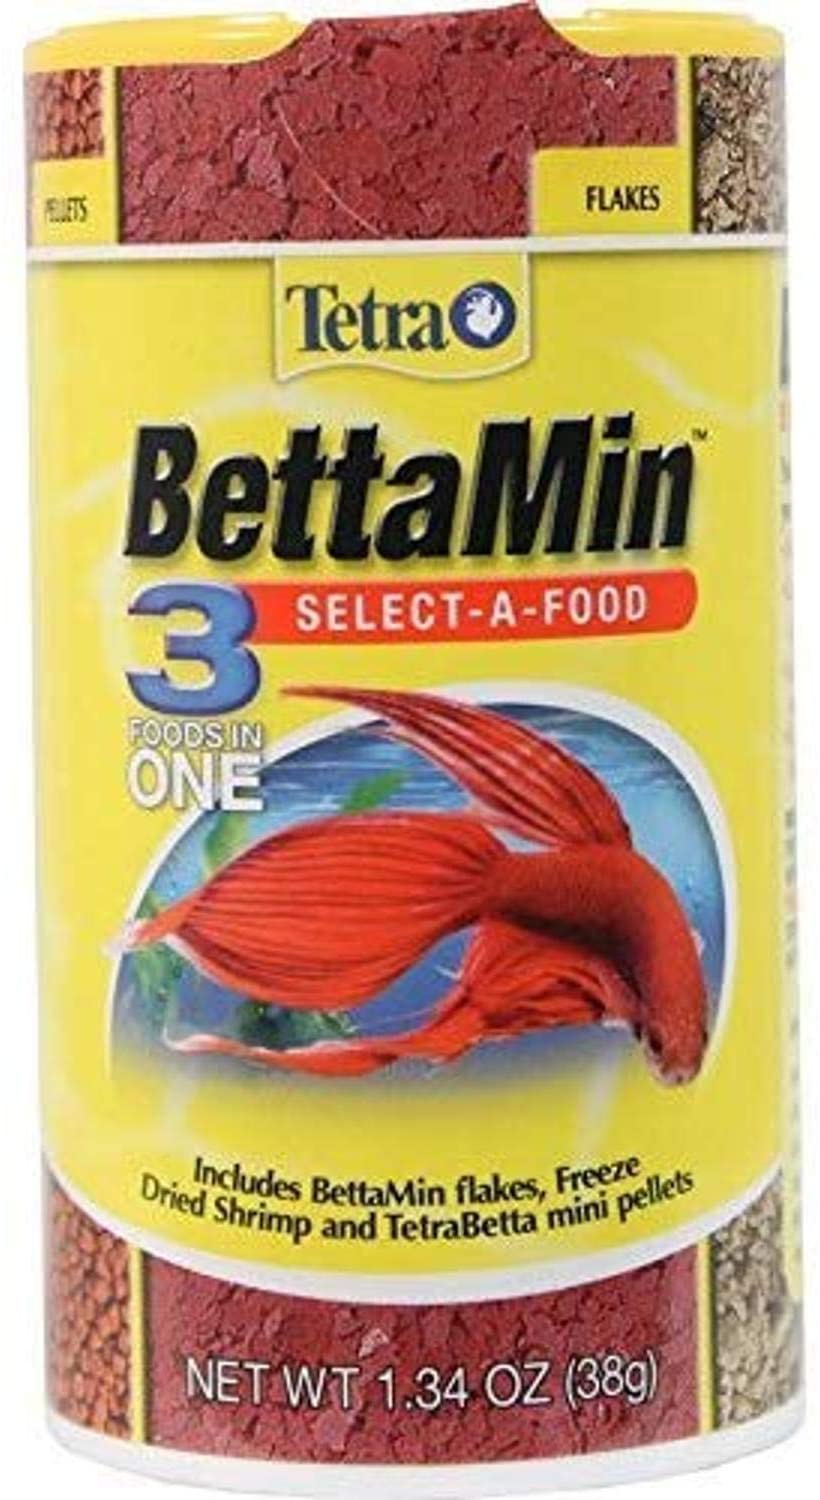 Tetra BettaMin 3 Select-A-Food